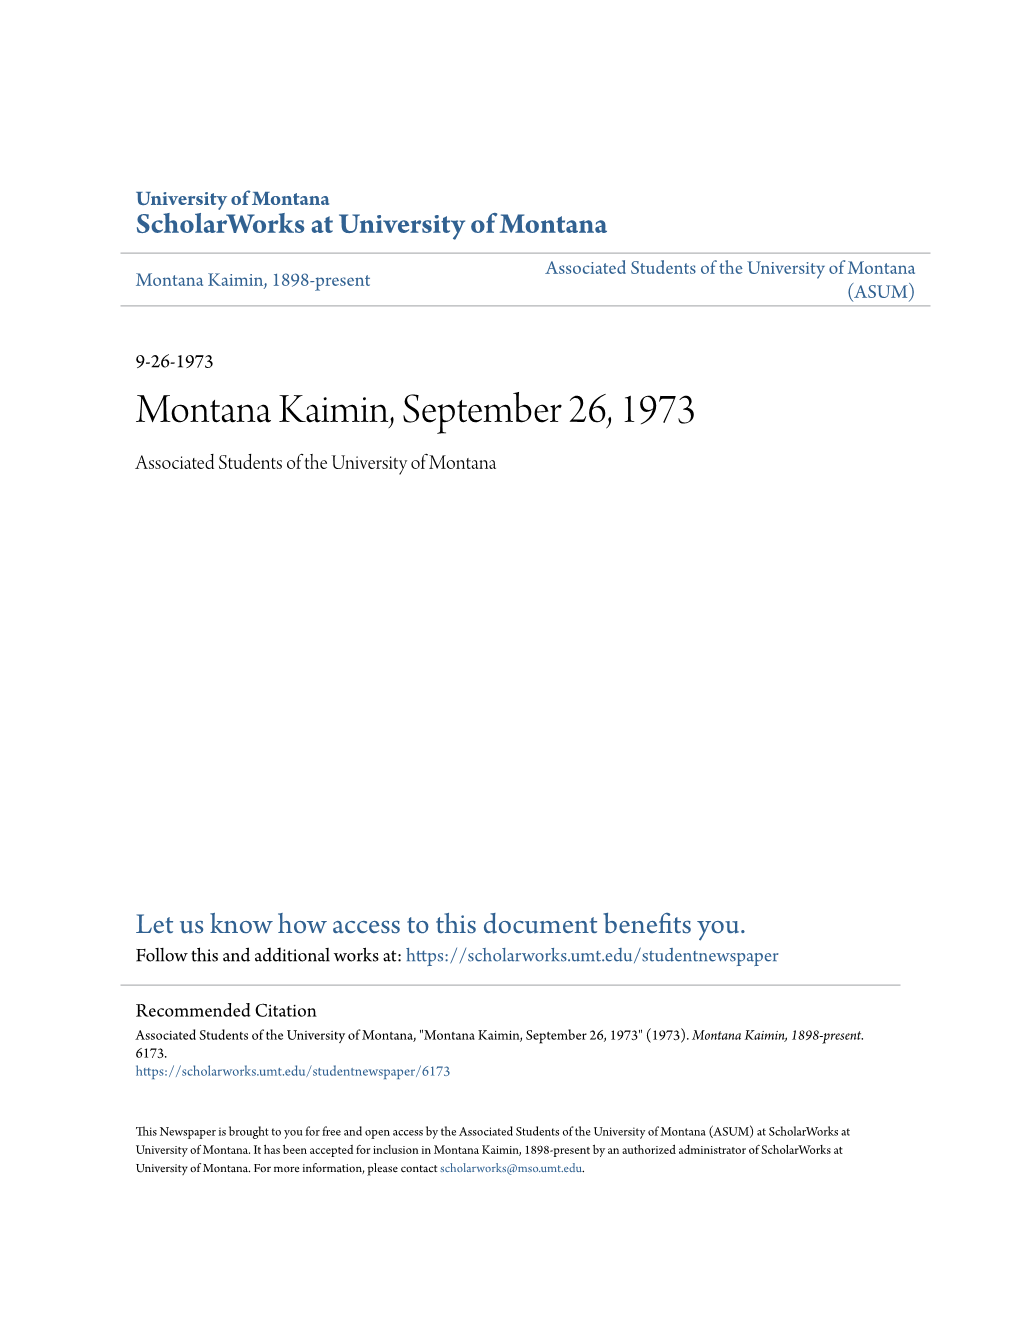 Montana Kaimin, September 26, 1973 Associated Students of the University of Montana